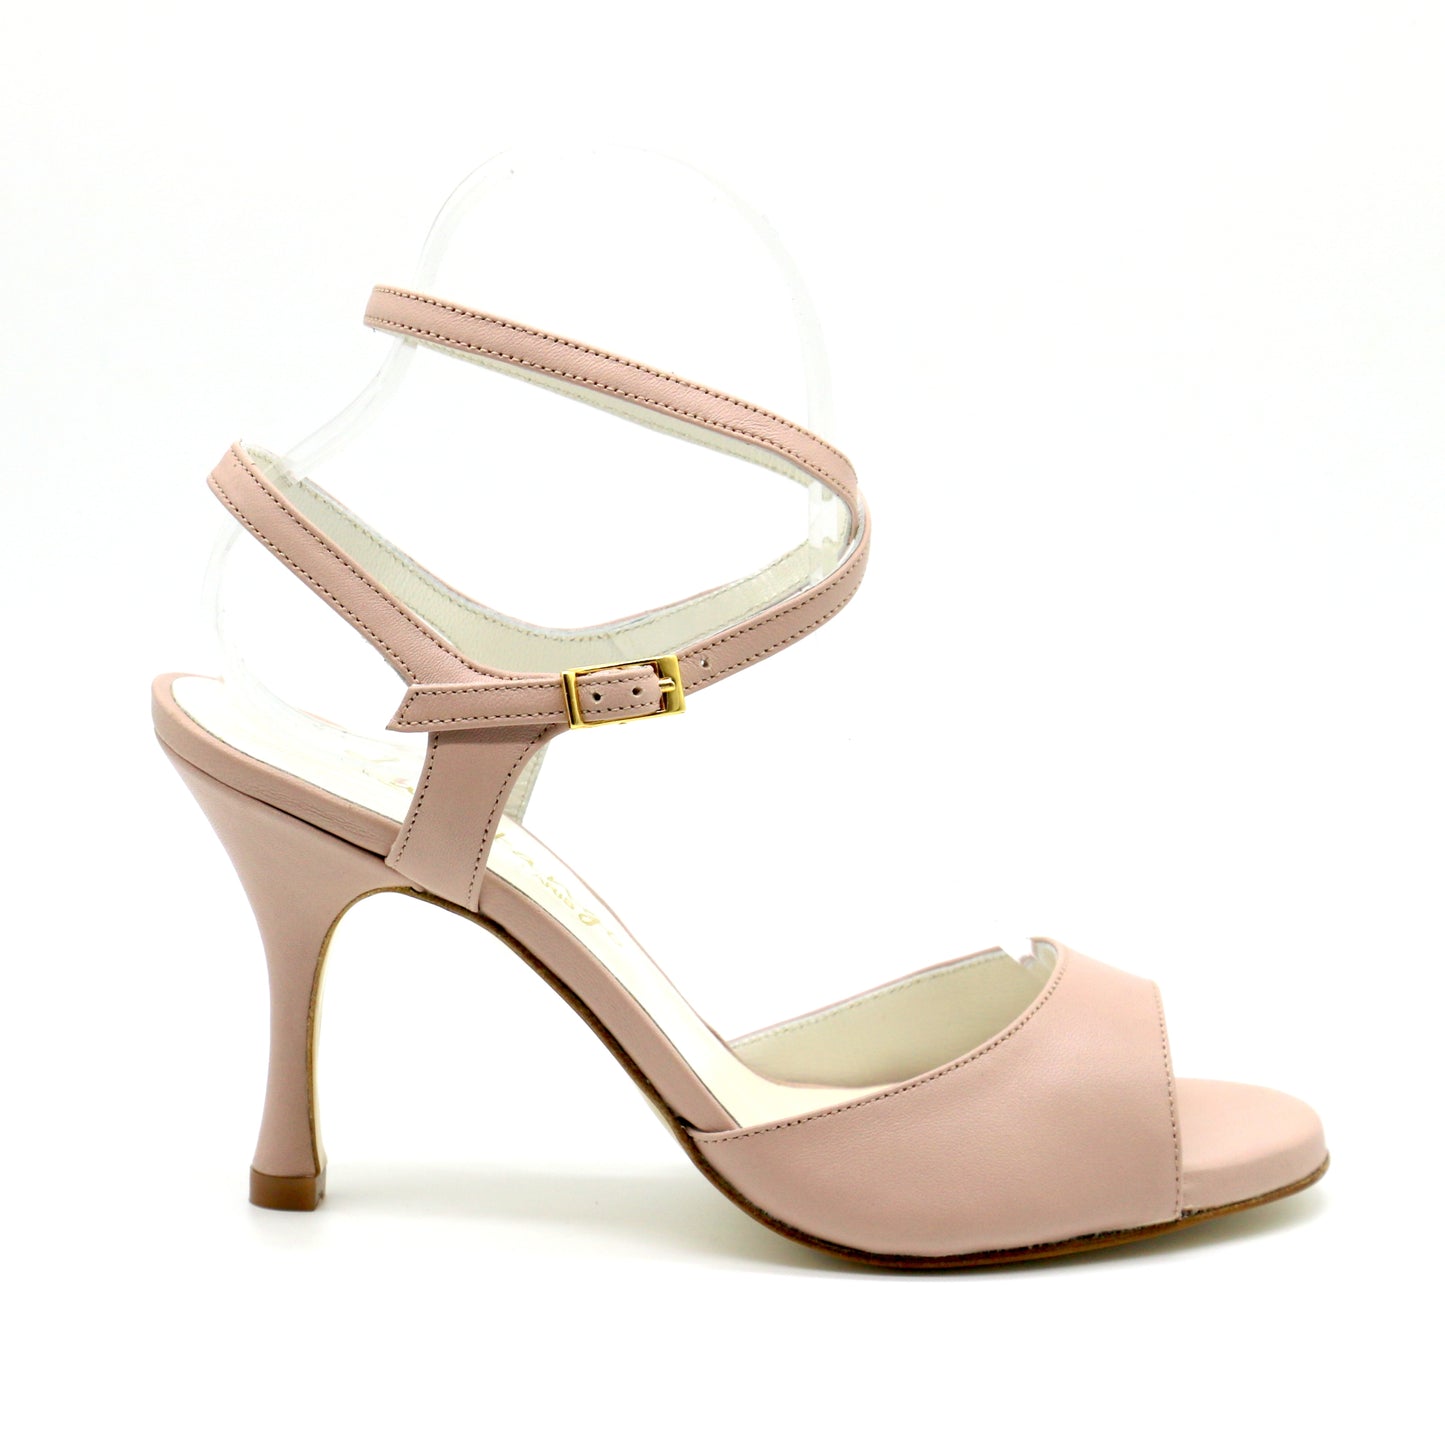 Sentimental Smooth leather Nude pink heels 8cm